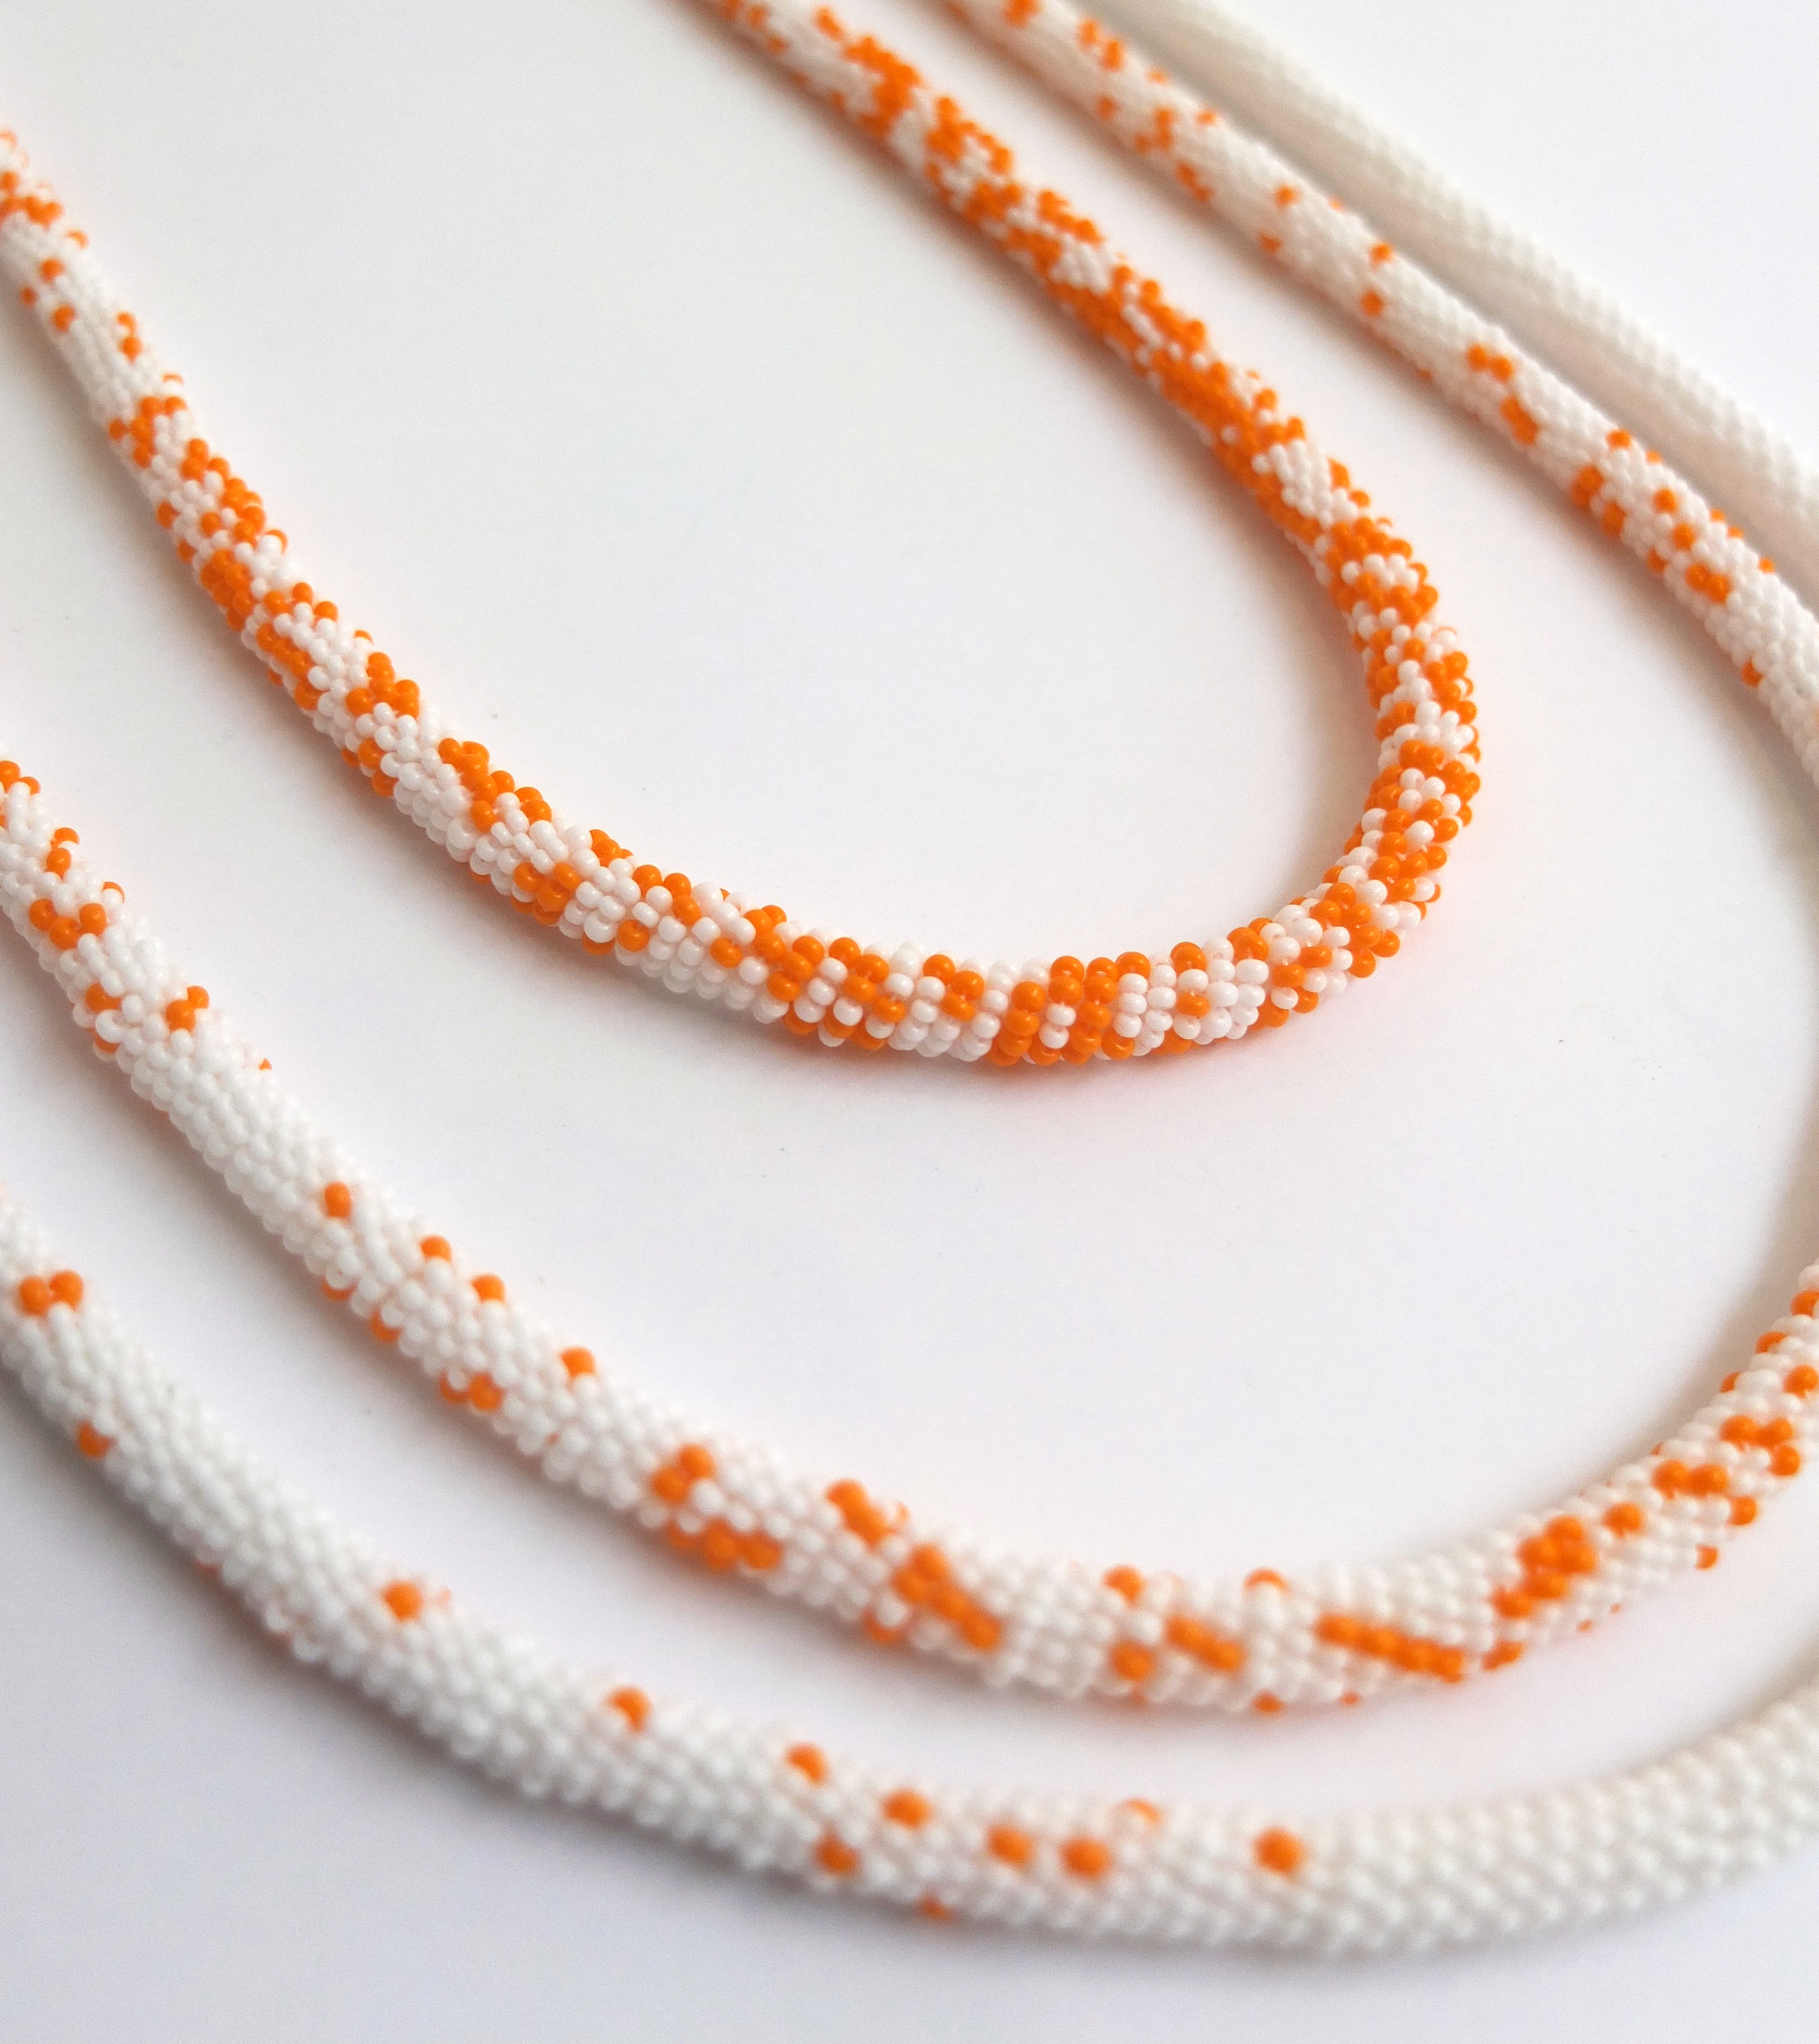 Florian Ladstaette, Seedbead Triple Necklace, polyester cord wrapped in seedbead strands